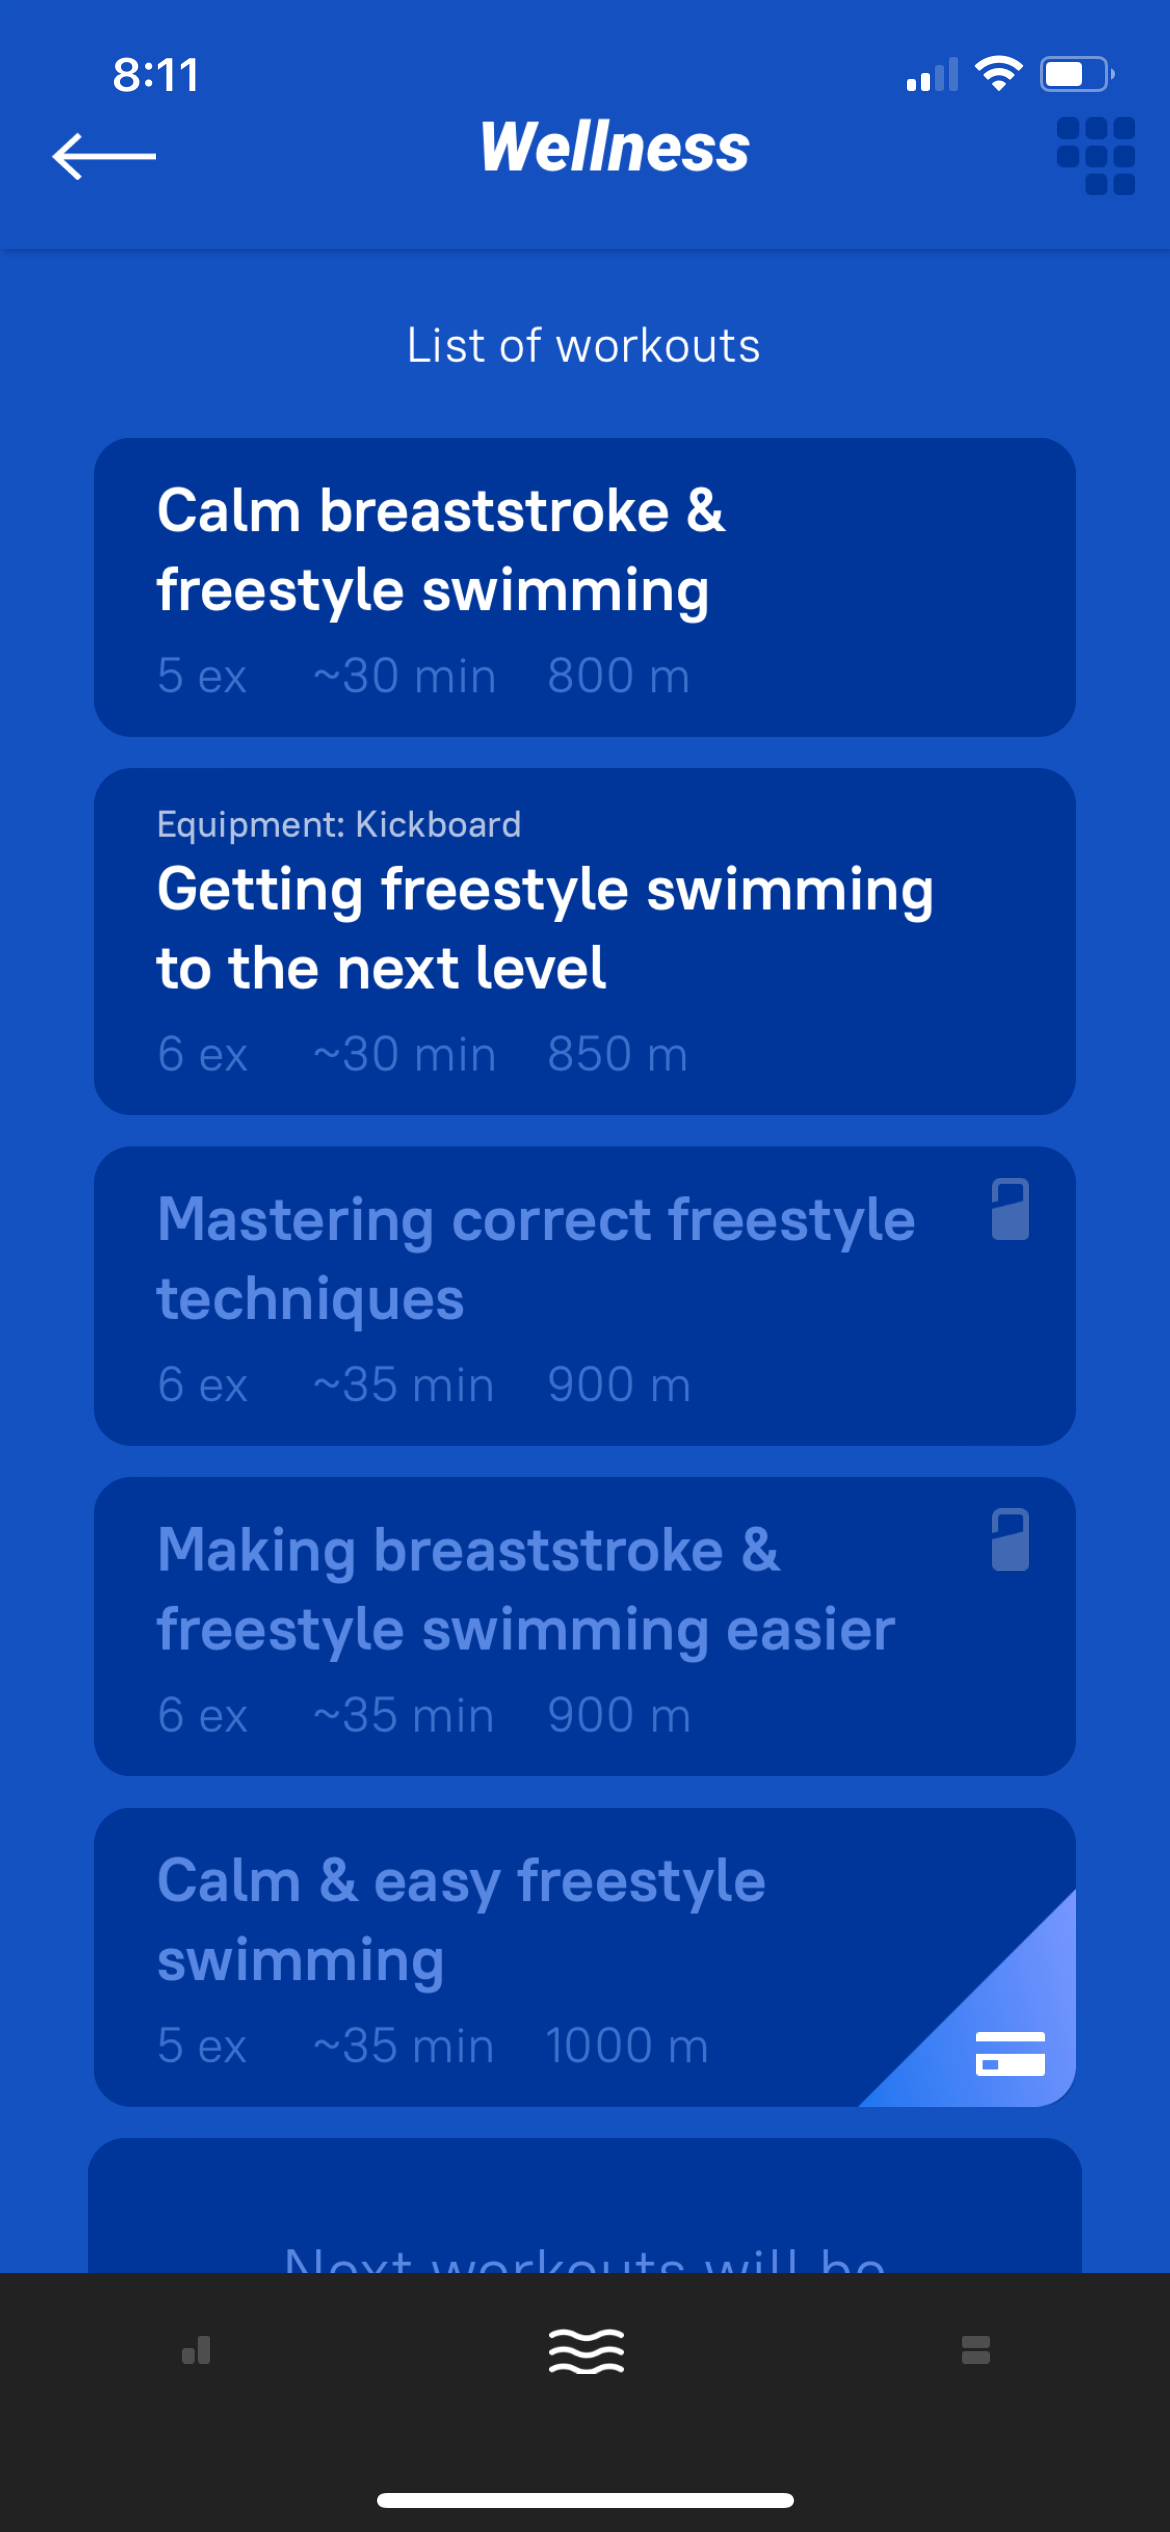 SwimUp app Wellness section